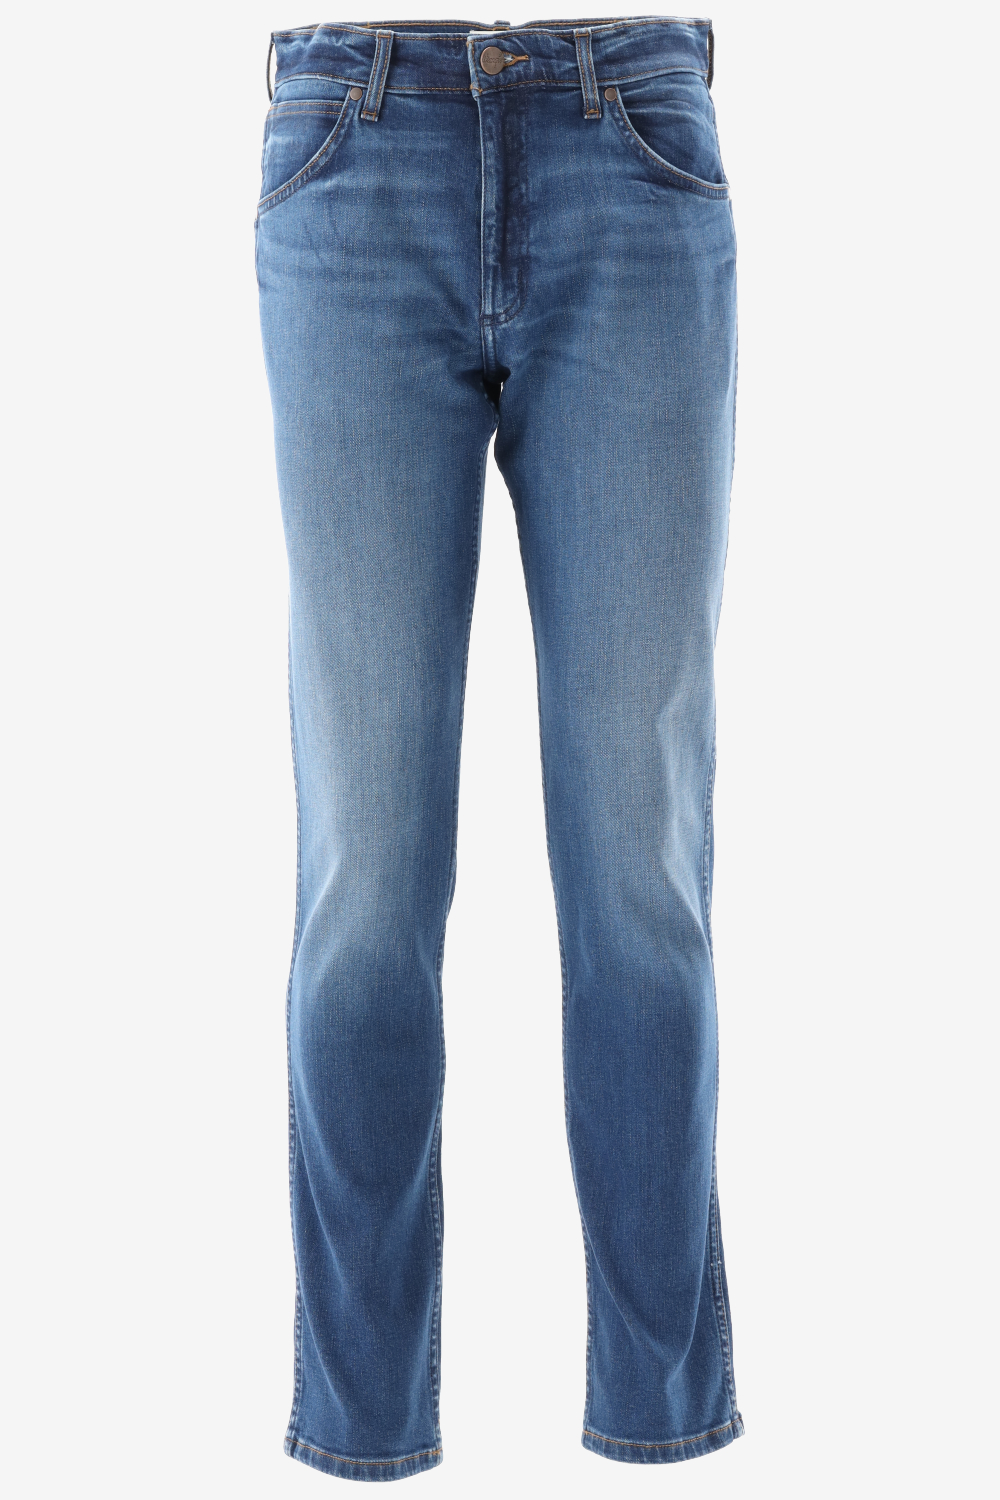 Wrangler Jeans Greensboro -modern Fit - Blauw - 42-32